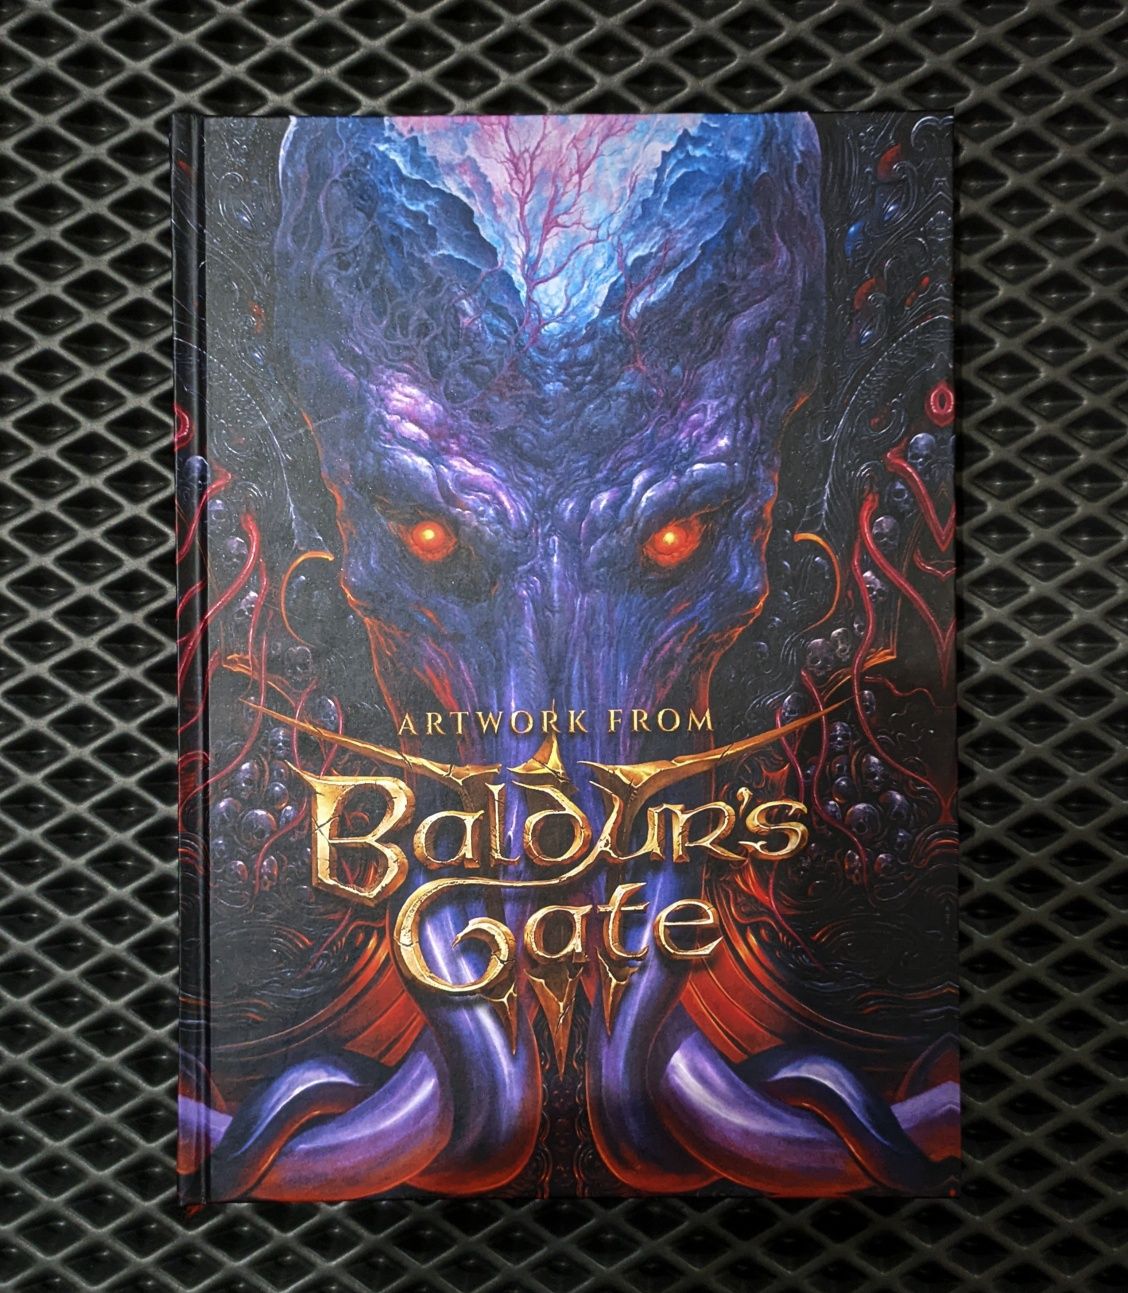 Baldur's gate 3 artbook